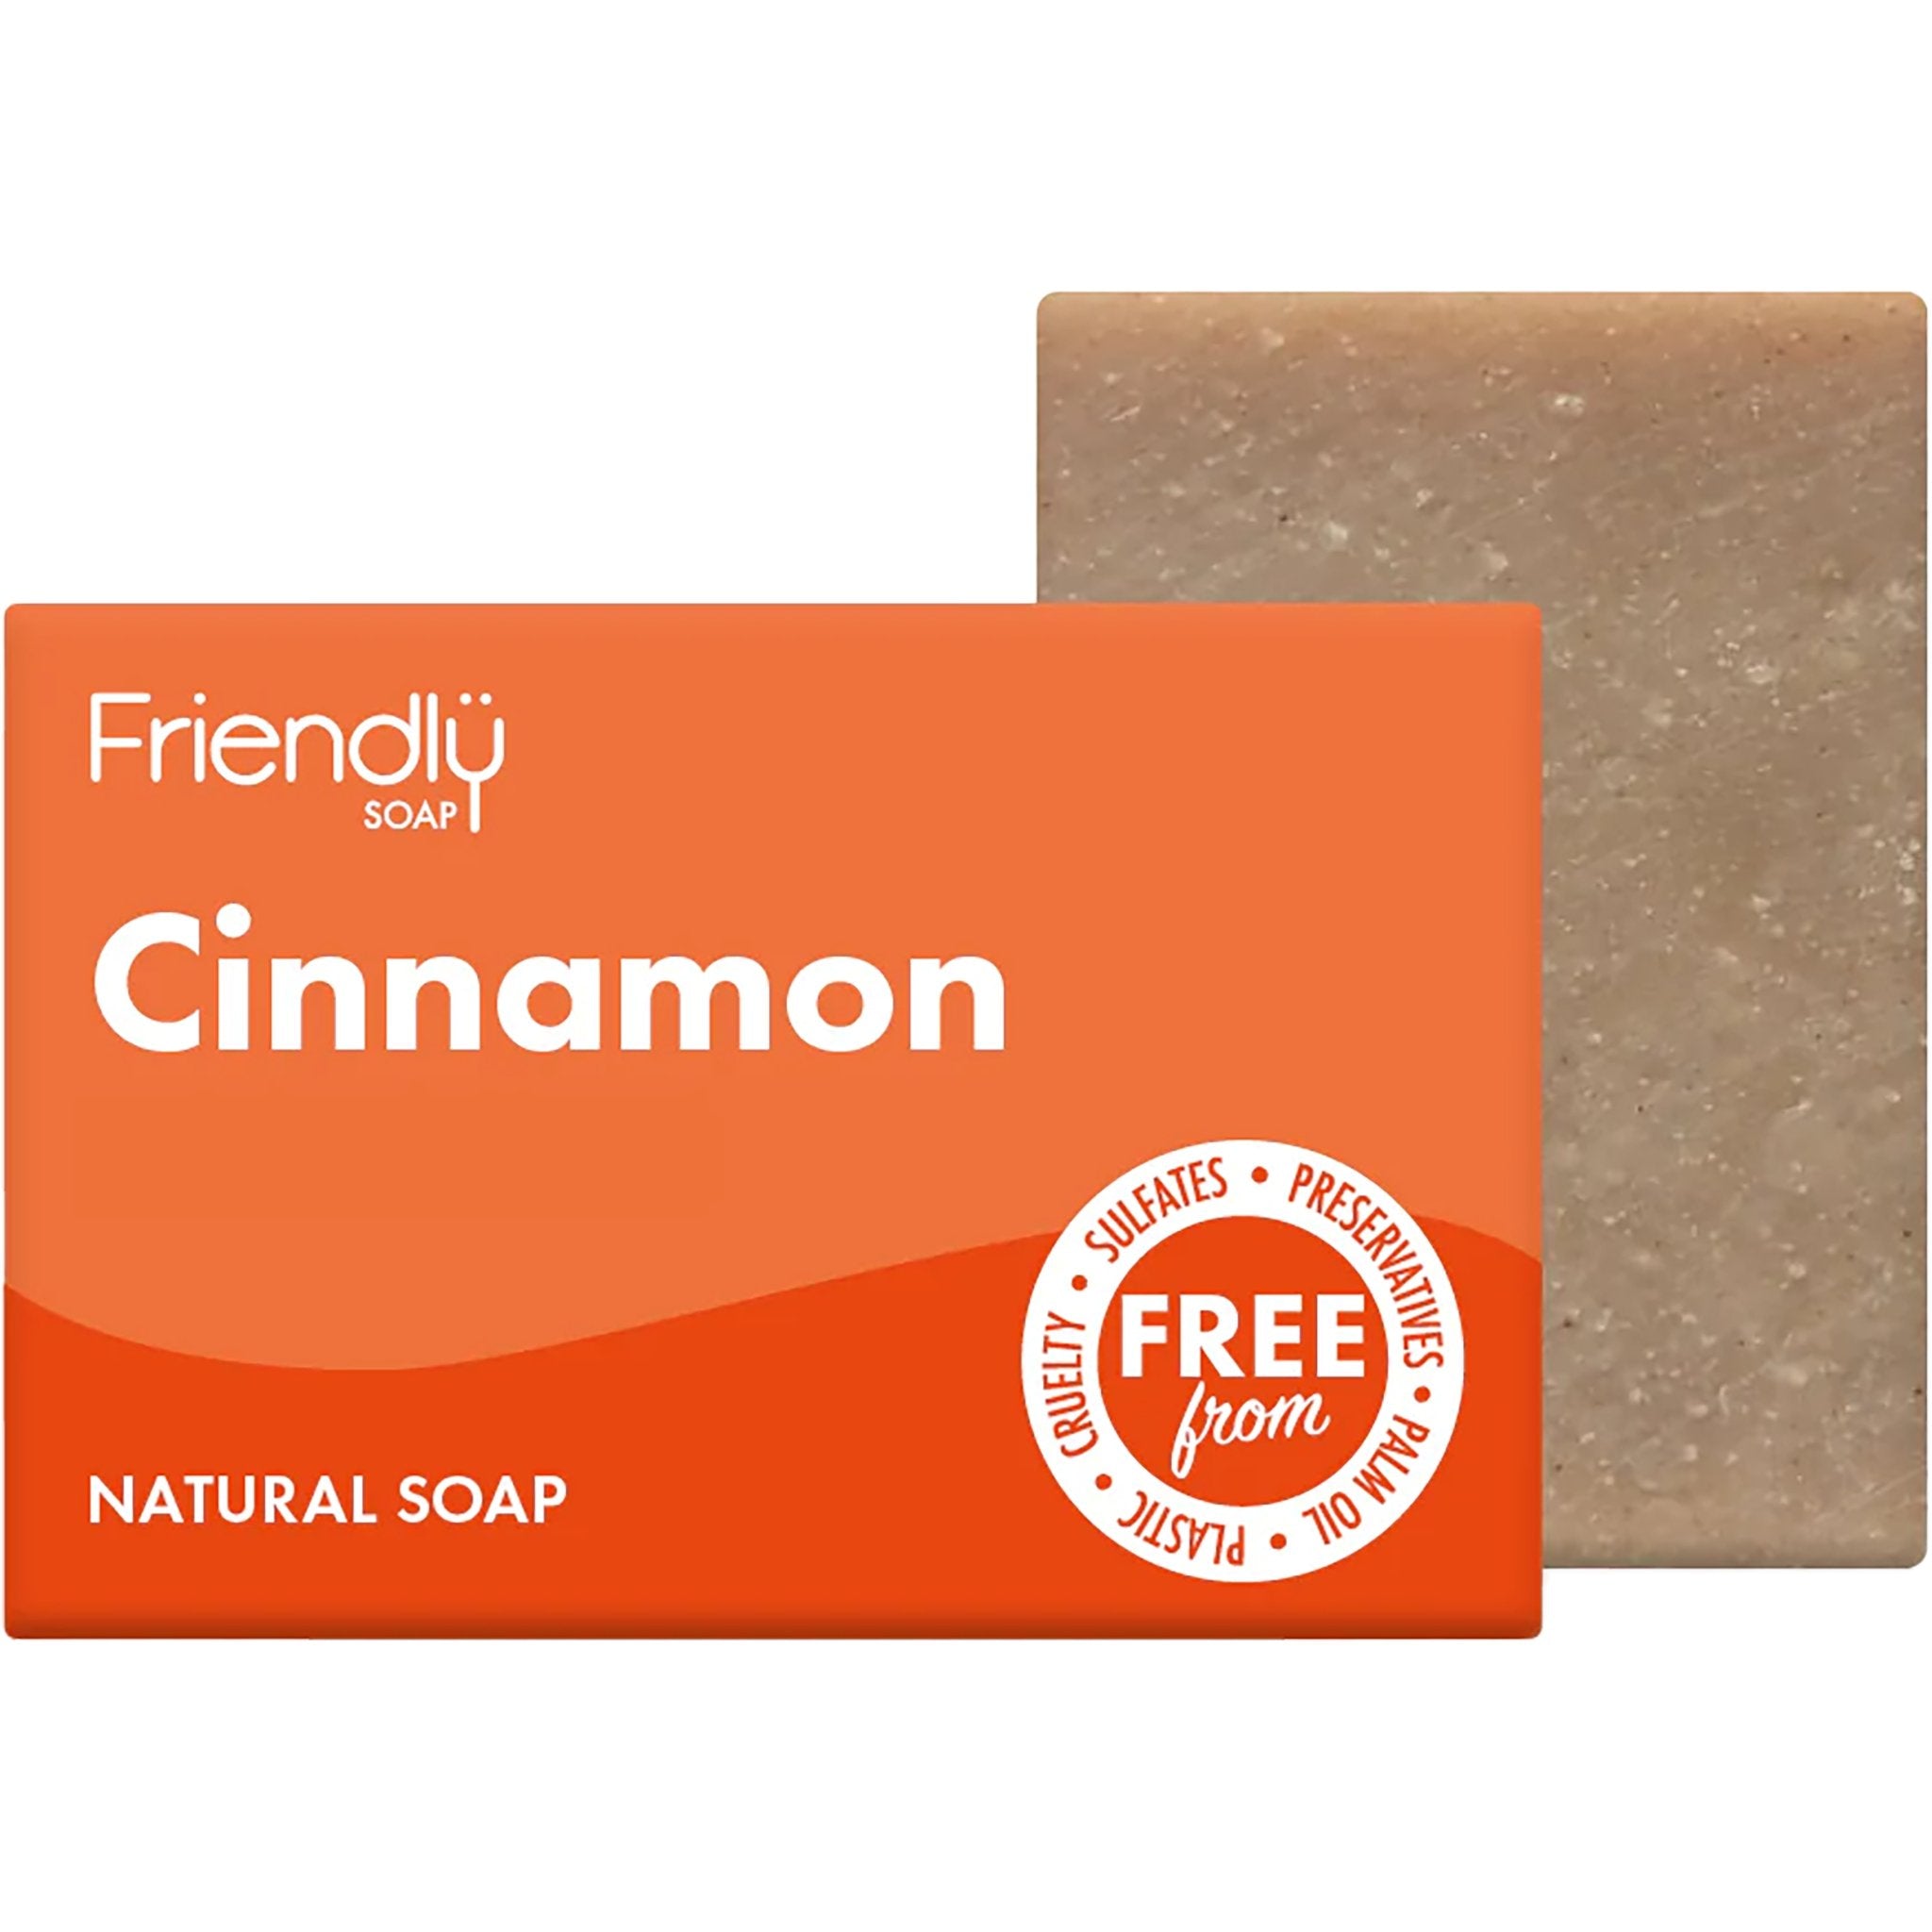 Cinnnamon Soap Bar - mypure.co.uk